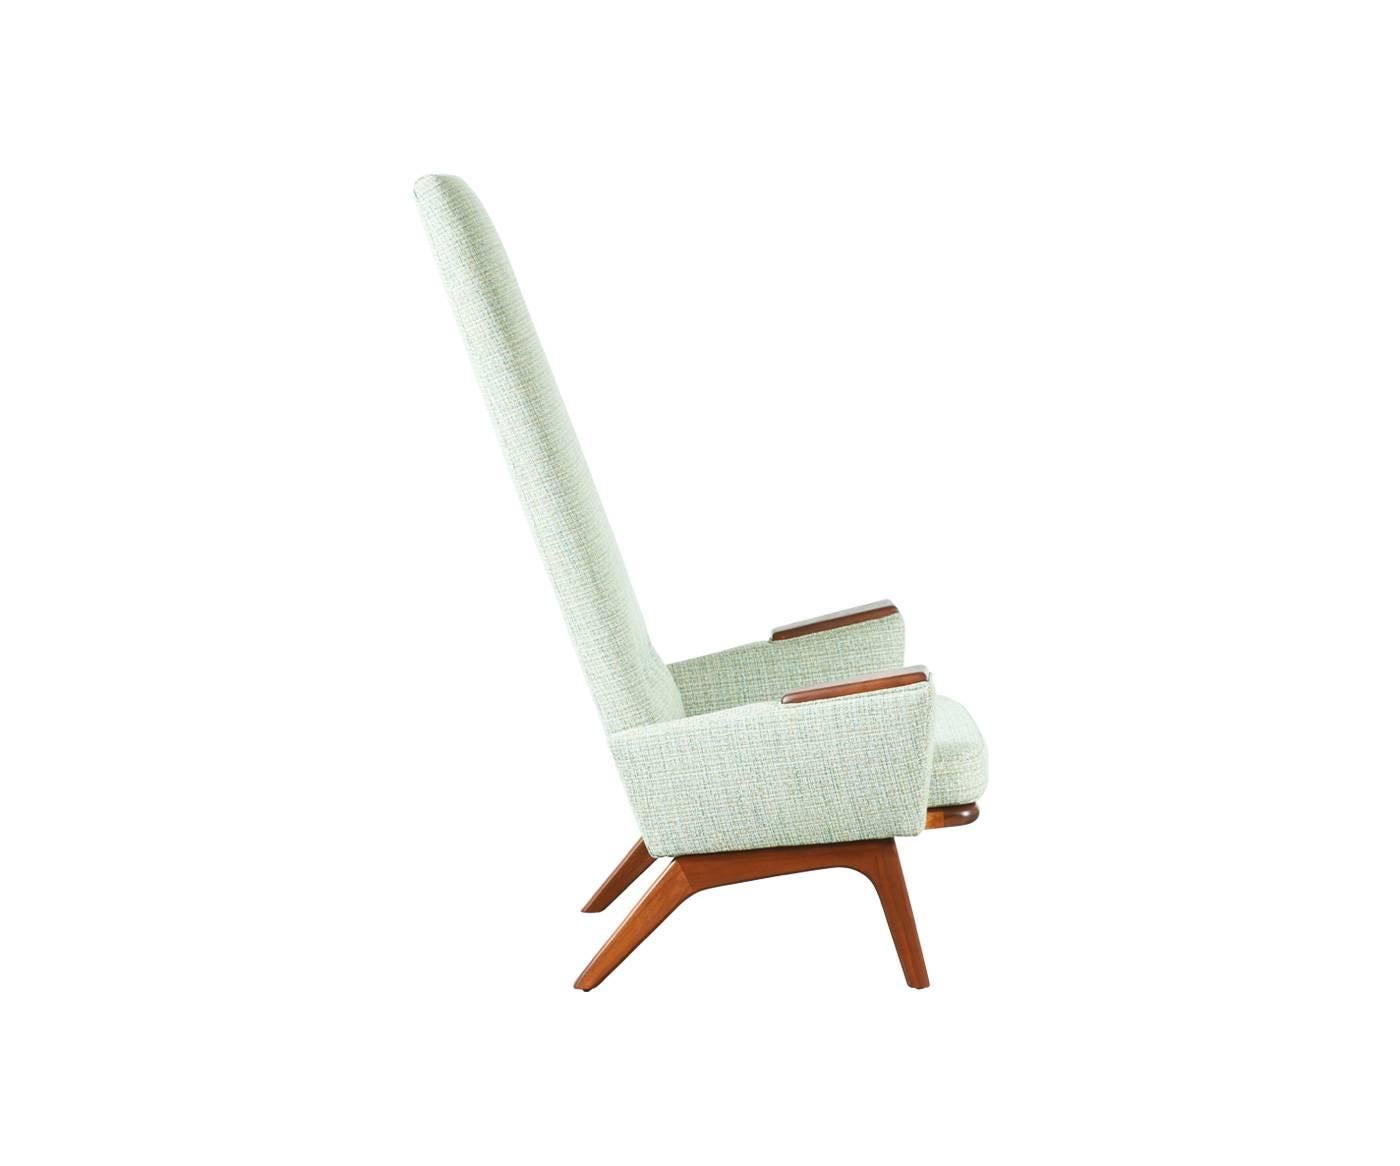 American Adrian Pearsall “Slim Jim” High Back Chair for Craft Associates